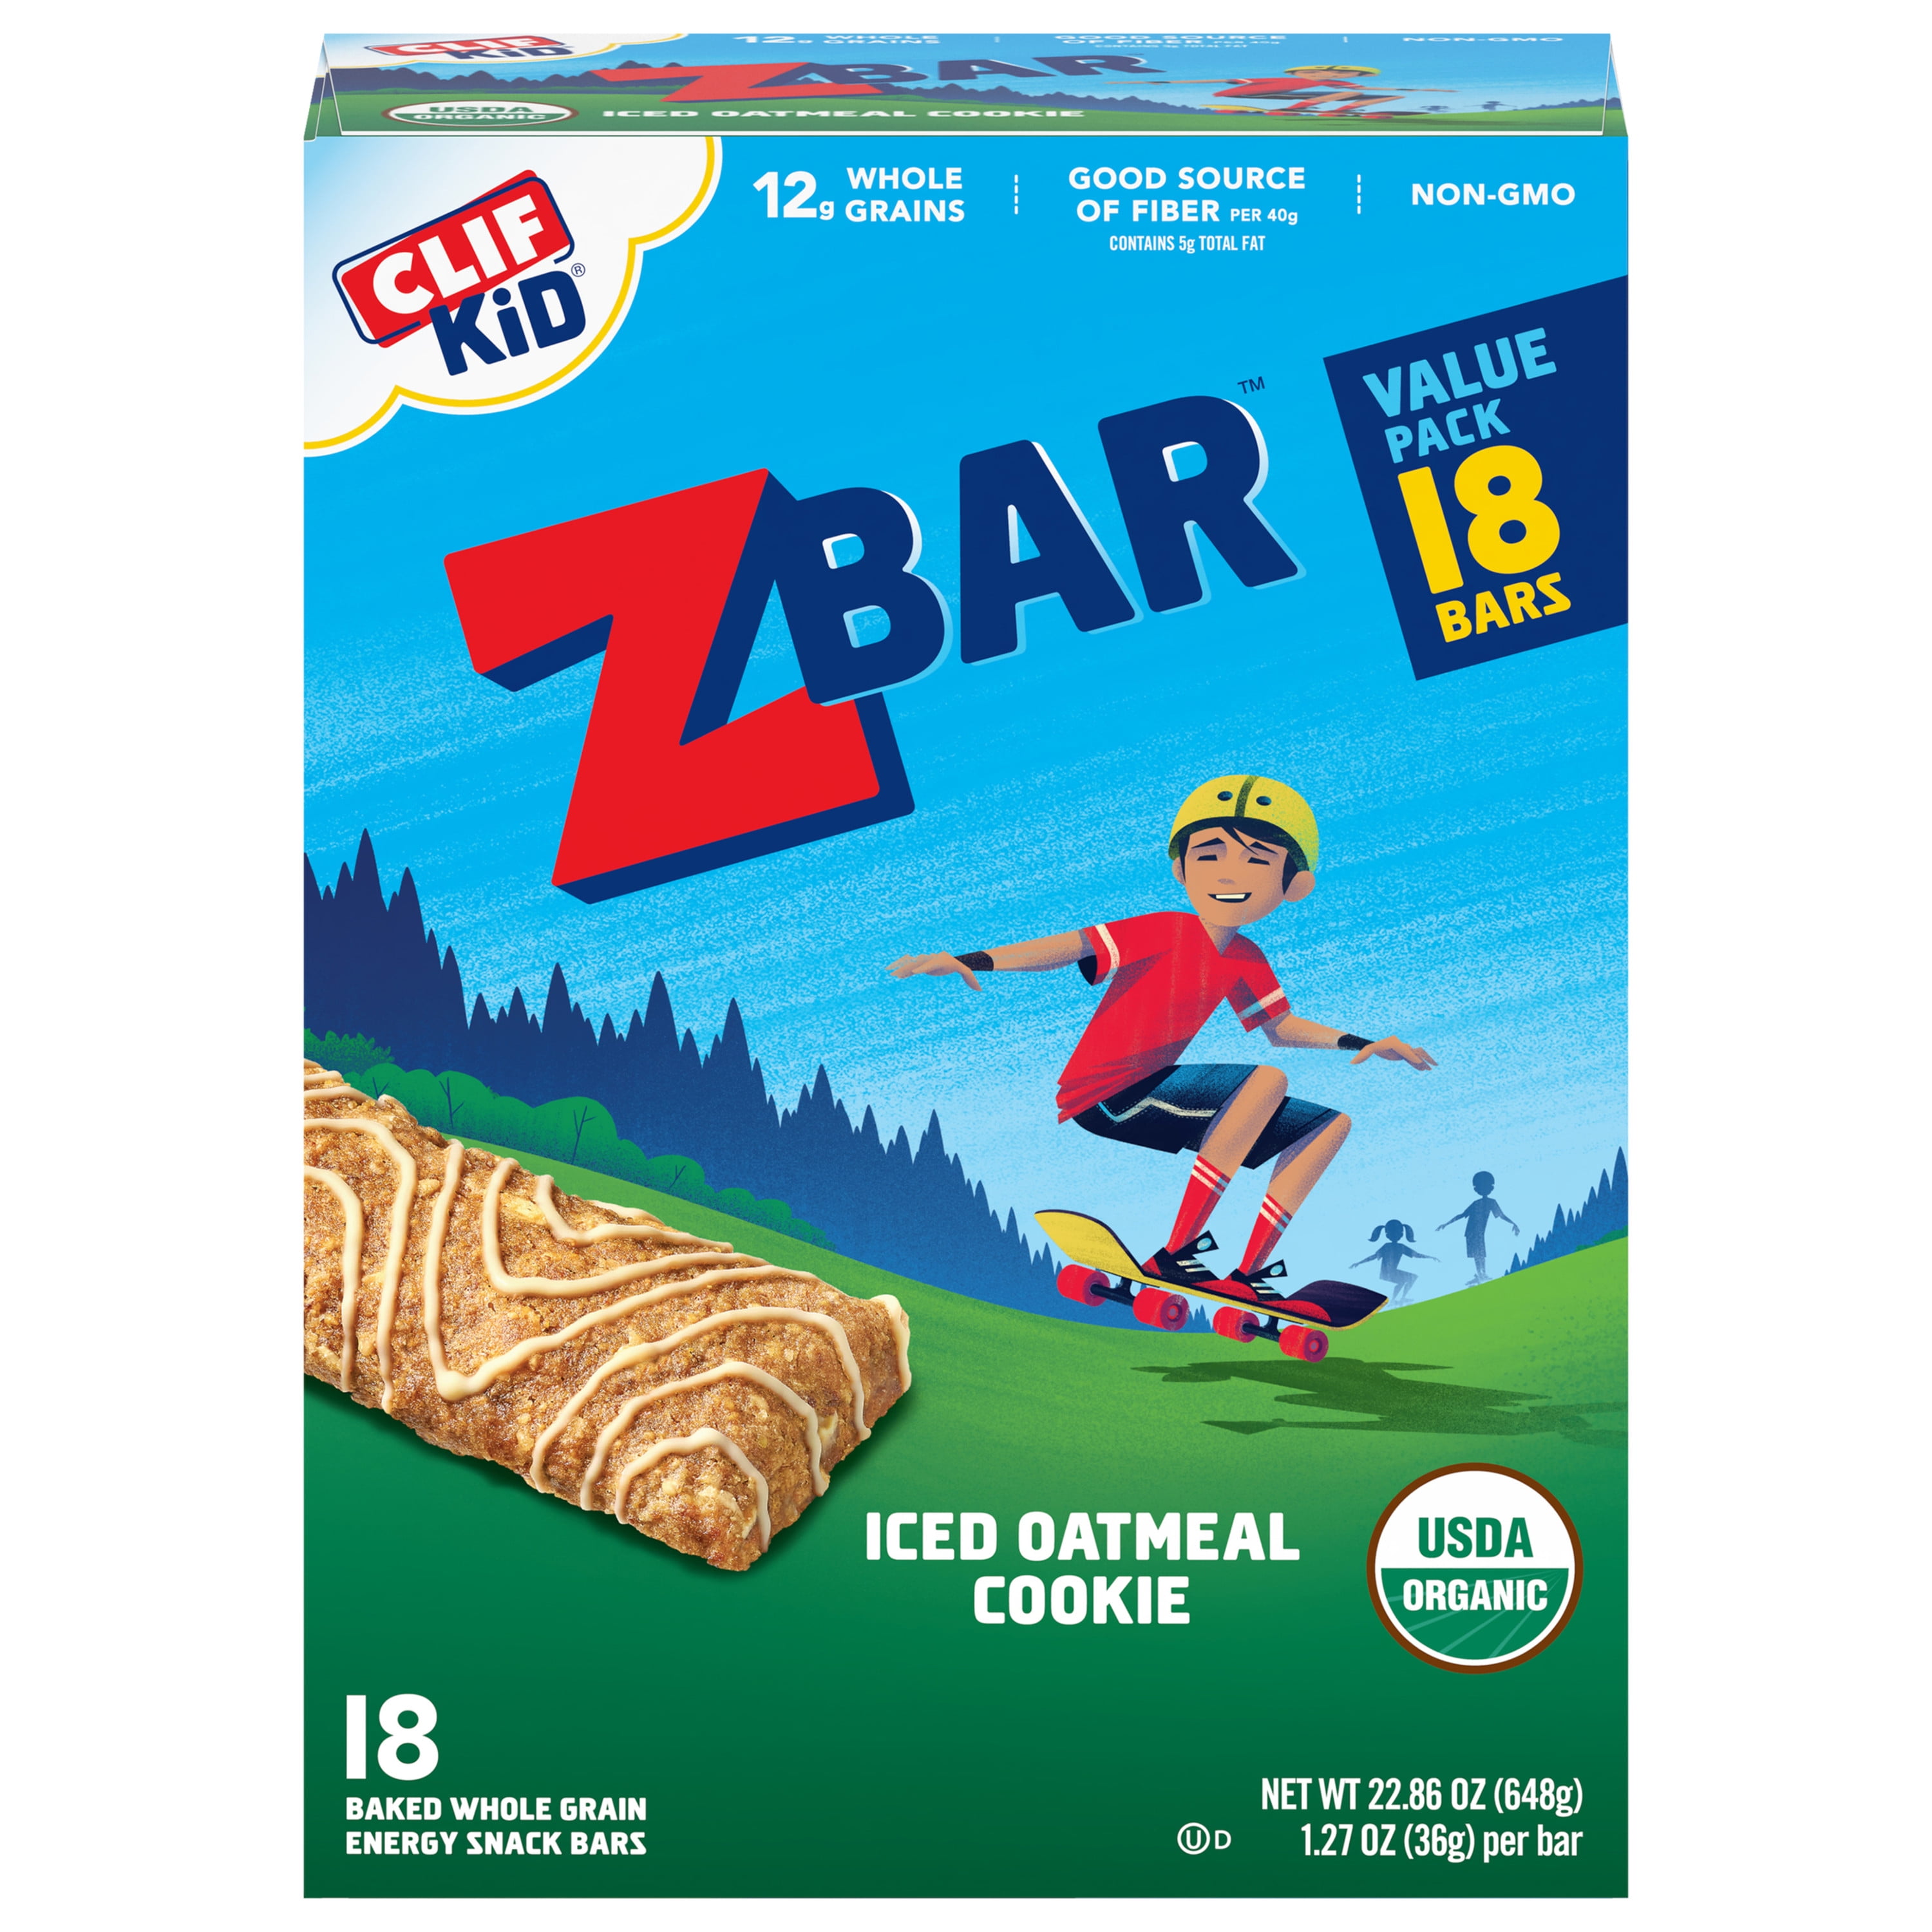 Clif Kid Zbar Organic Whole Grain Energy Snack Bars, Granola Bars, Iced Oatmeal Cookie Bar, 18 Ct, 1.27 oz.